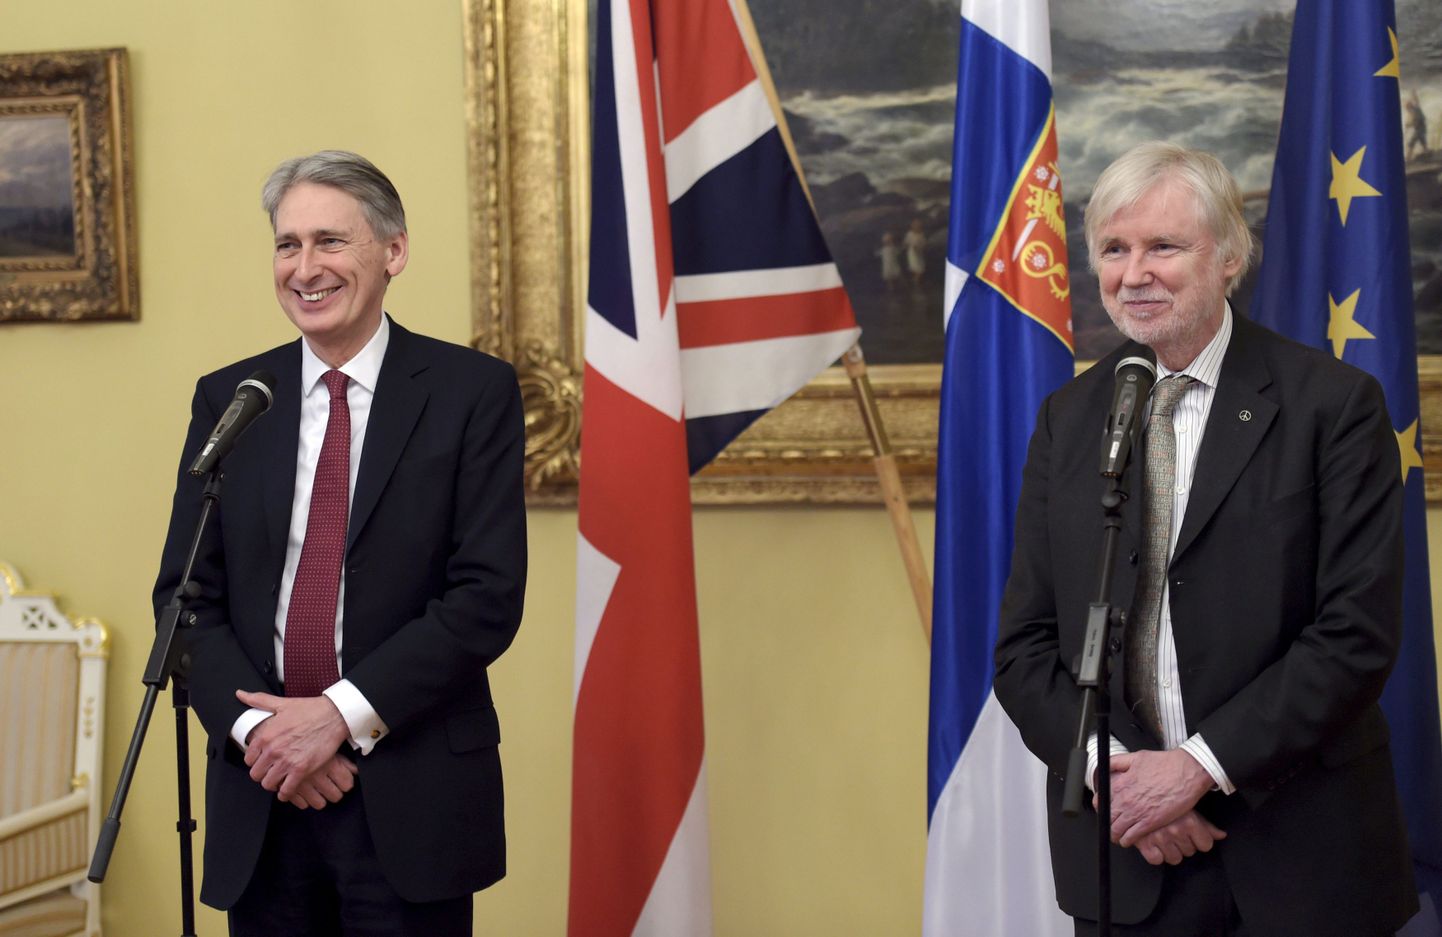 Briti välisminister Philip Hammond koos Soome kolleegi Erkki Tuomiojaga 8. jaanuaril Helsingis.